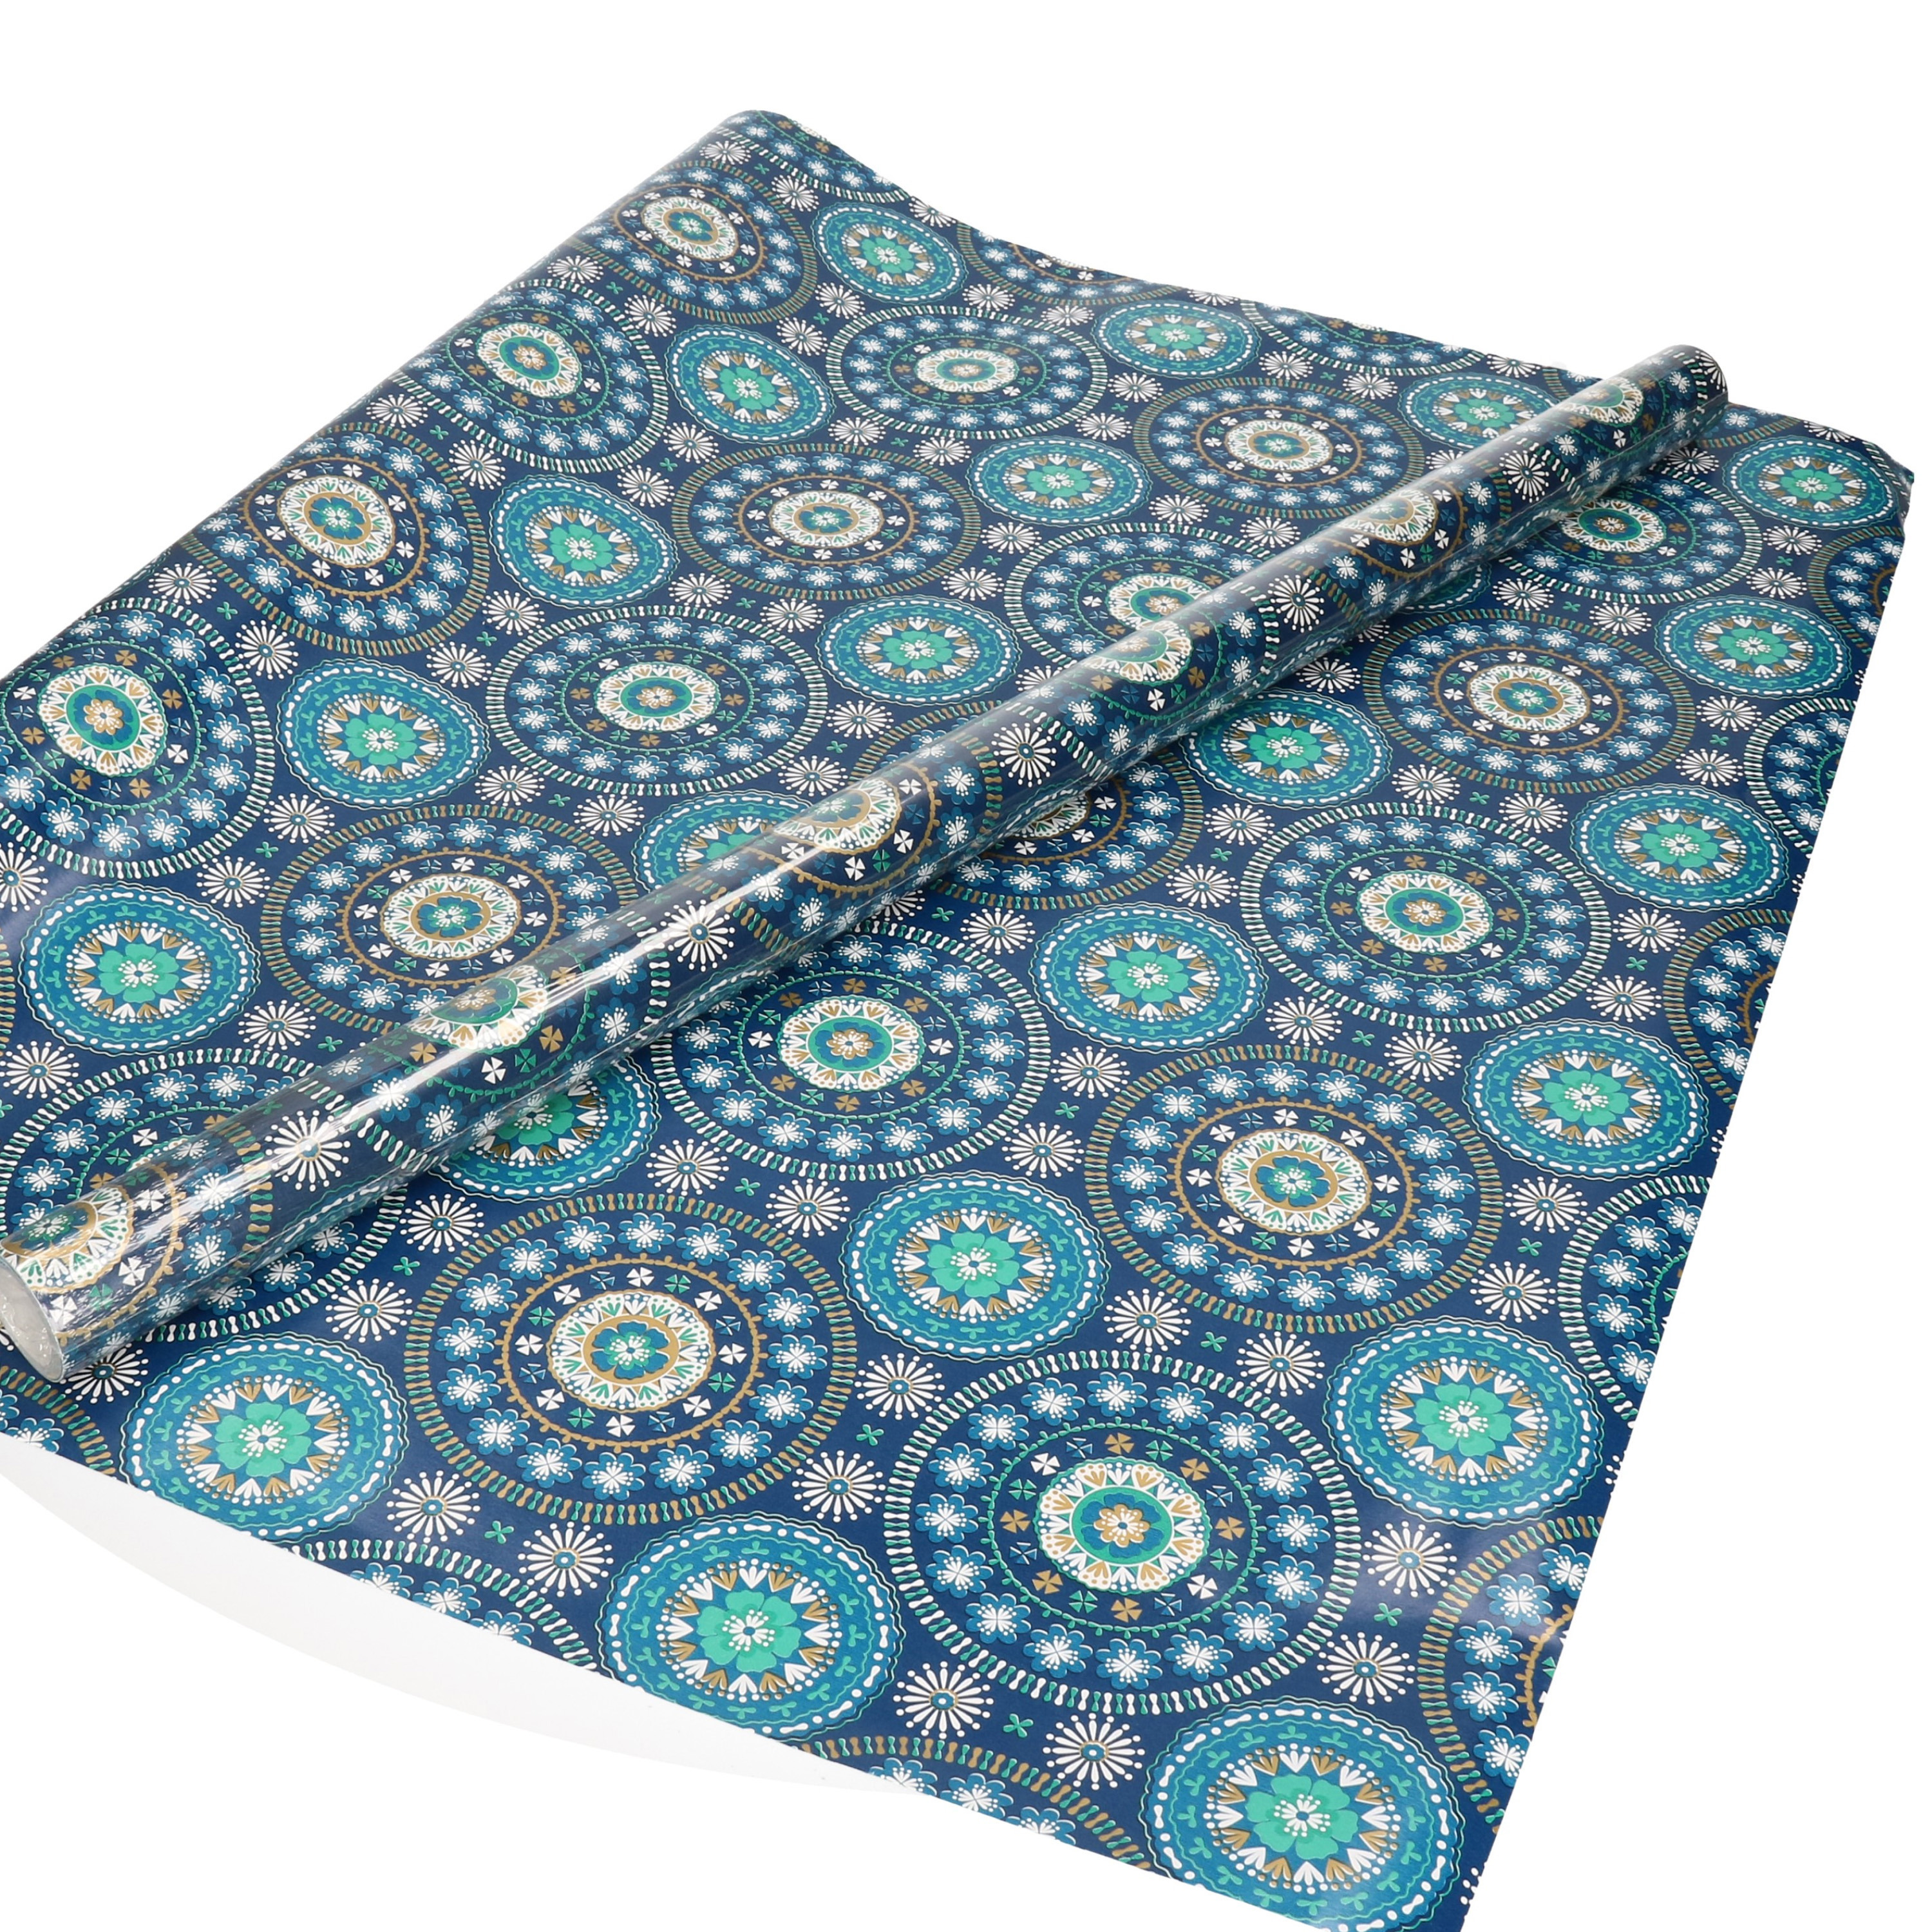 1x Inpakpapier/cadeaupapier blauw met mandala motief 200 x 70 cm rol